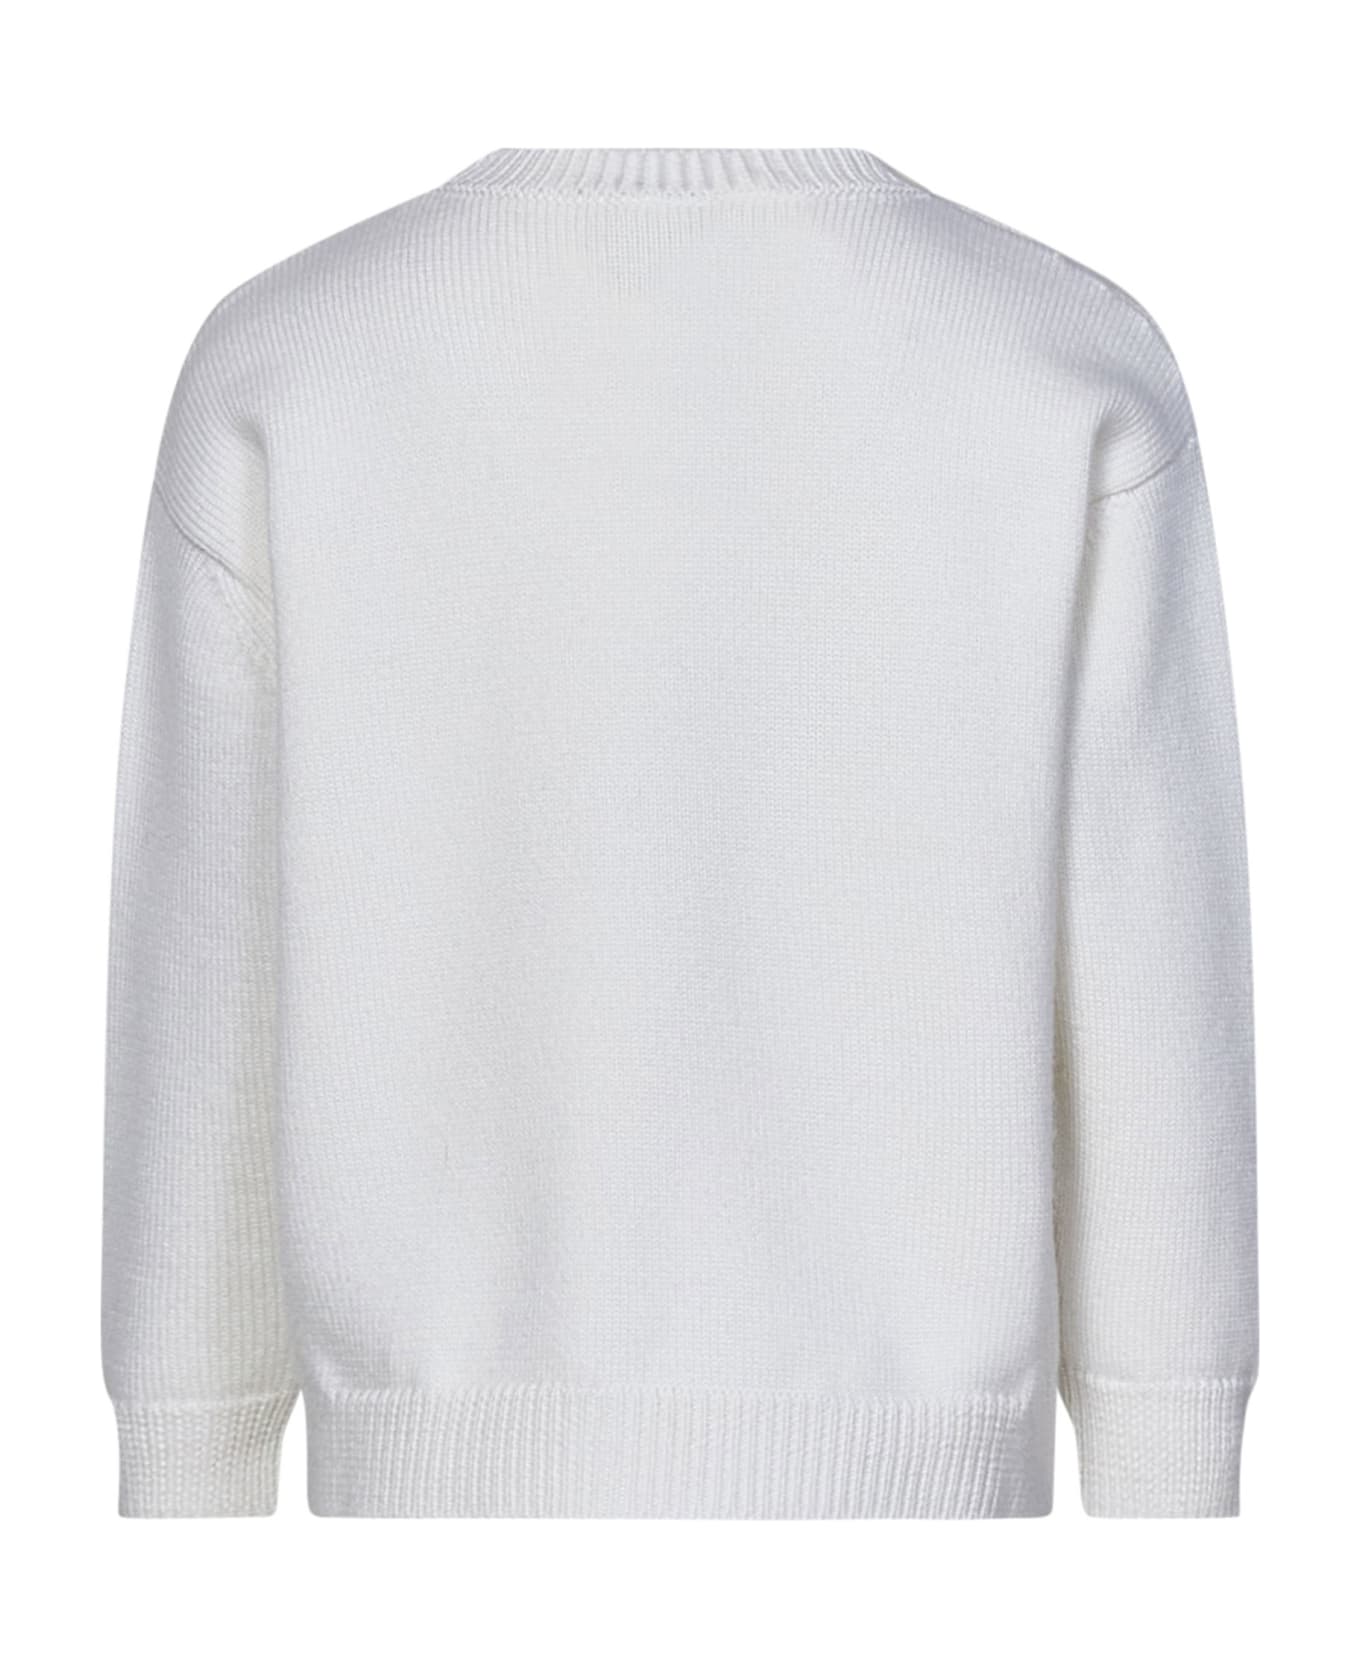 Fendi Kids Sweater - White